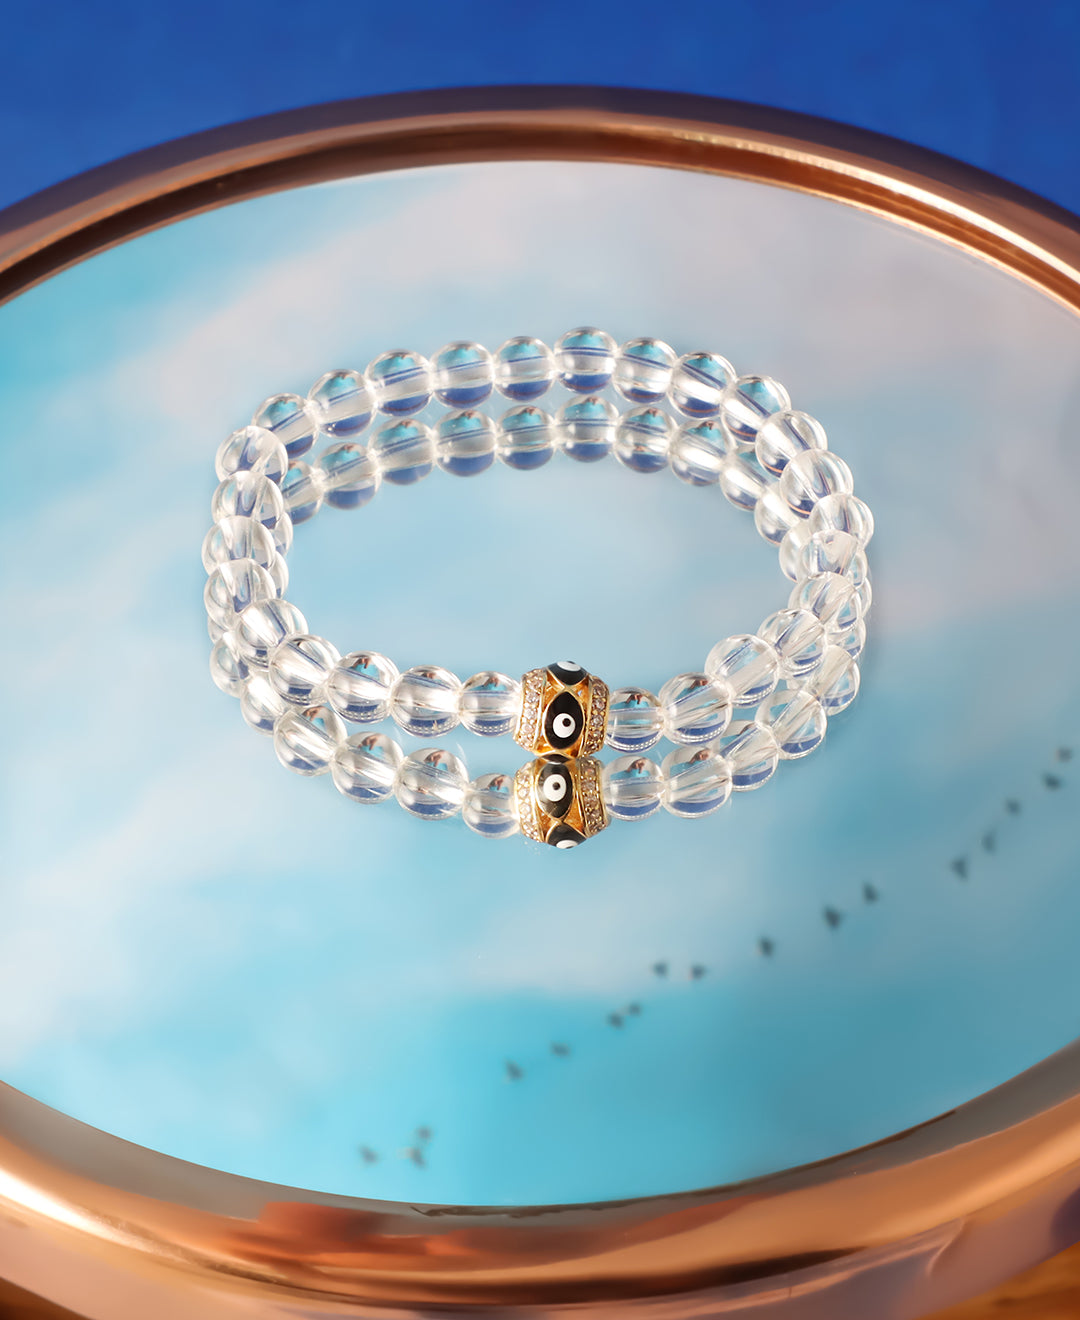 Natural Crystal Quartz Bracelet on Wrist - Healing Gemstone Jewelry